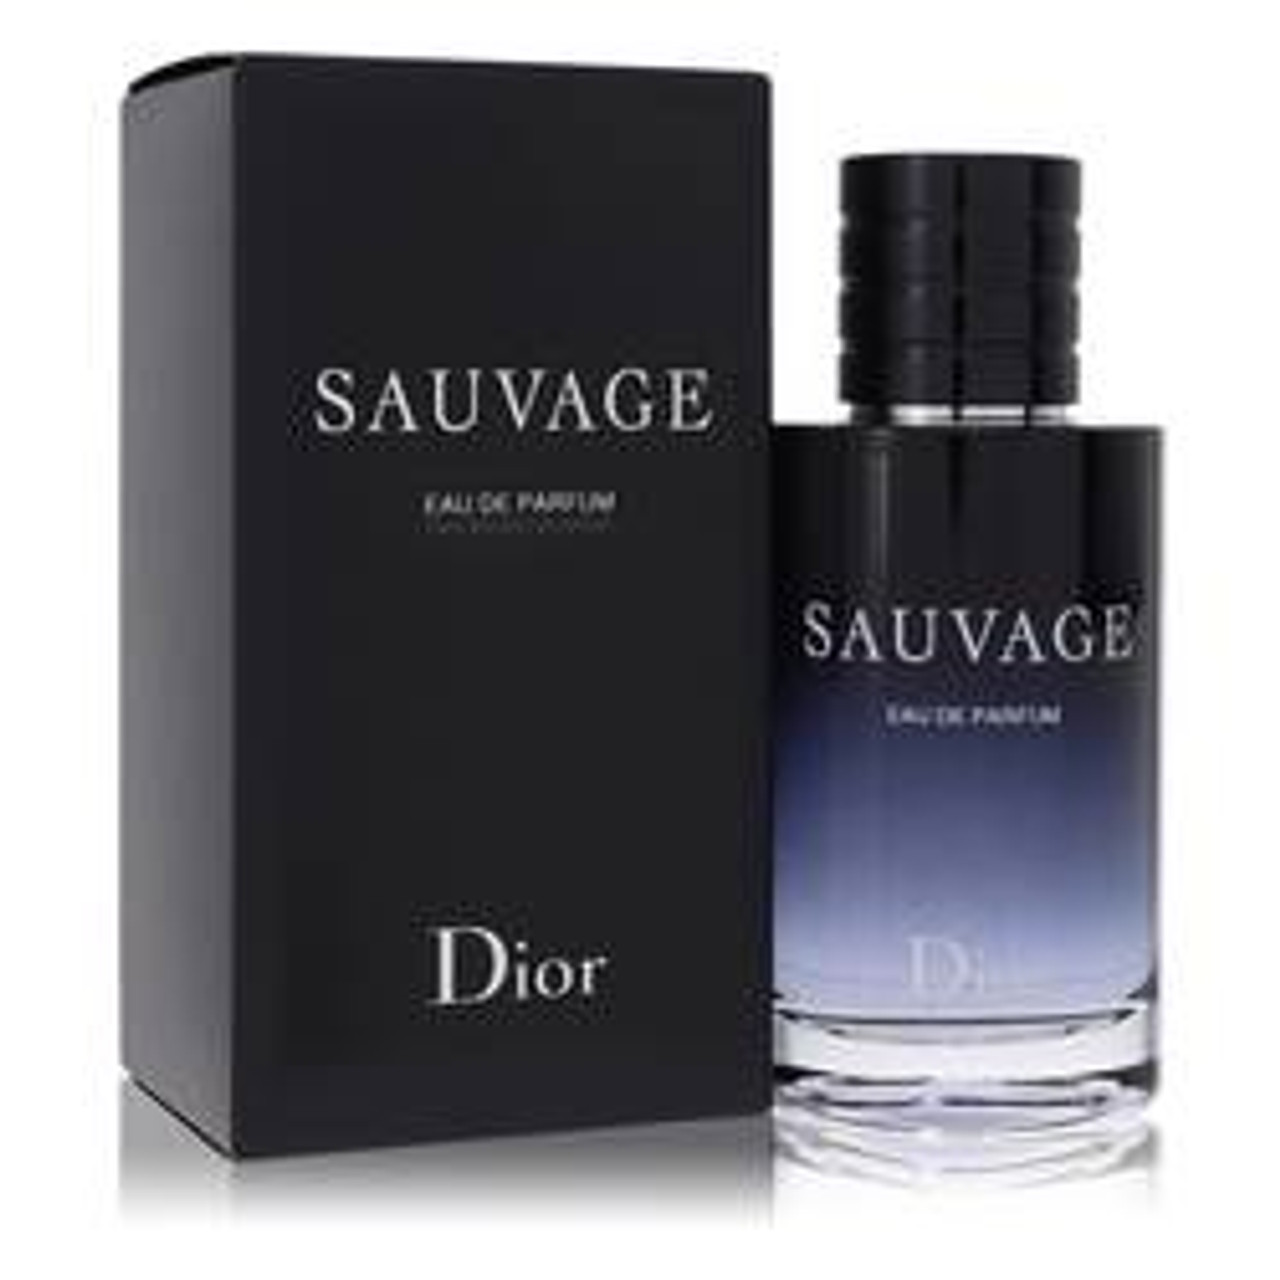 Sauvage Cologne By Christian Dior Eau De Parfum Spray 3.4 oz for Men - *Pre-Order